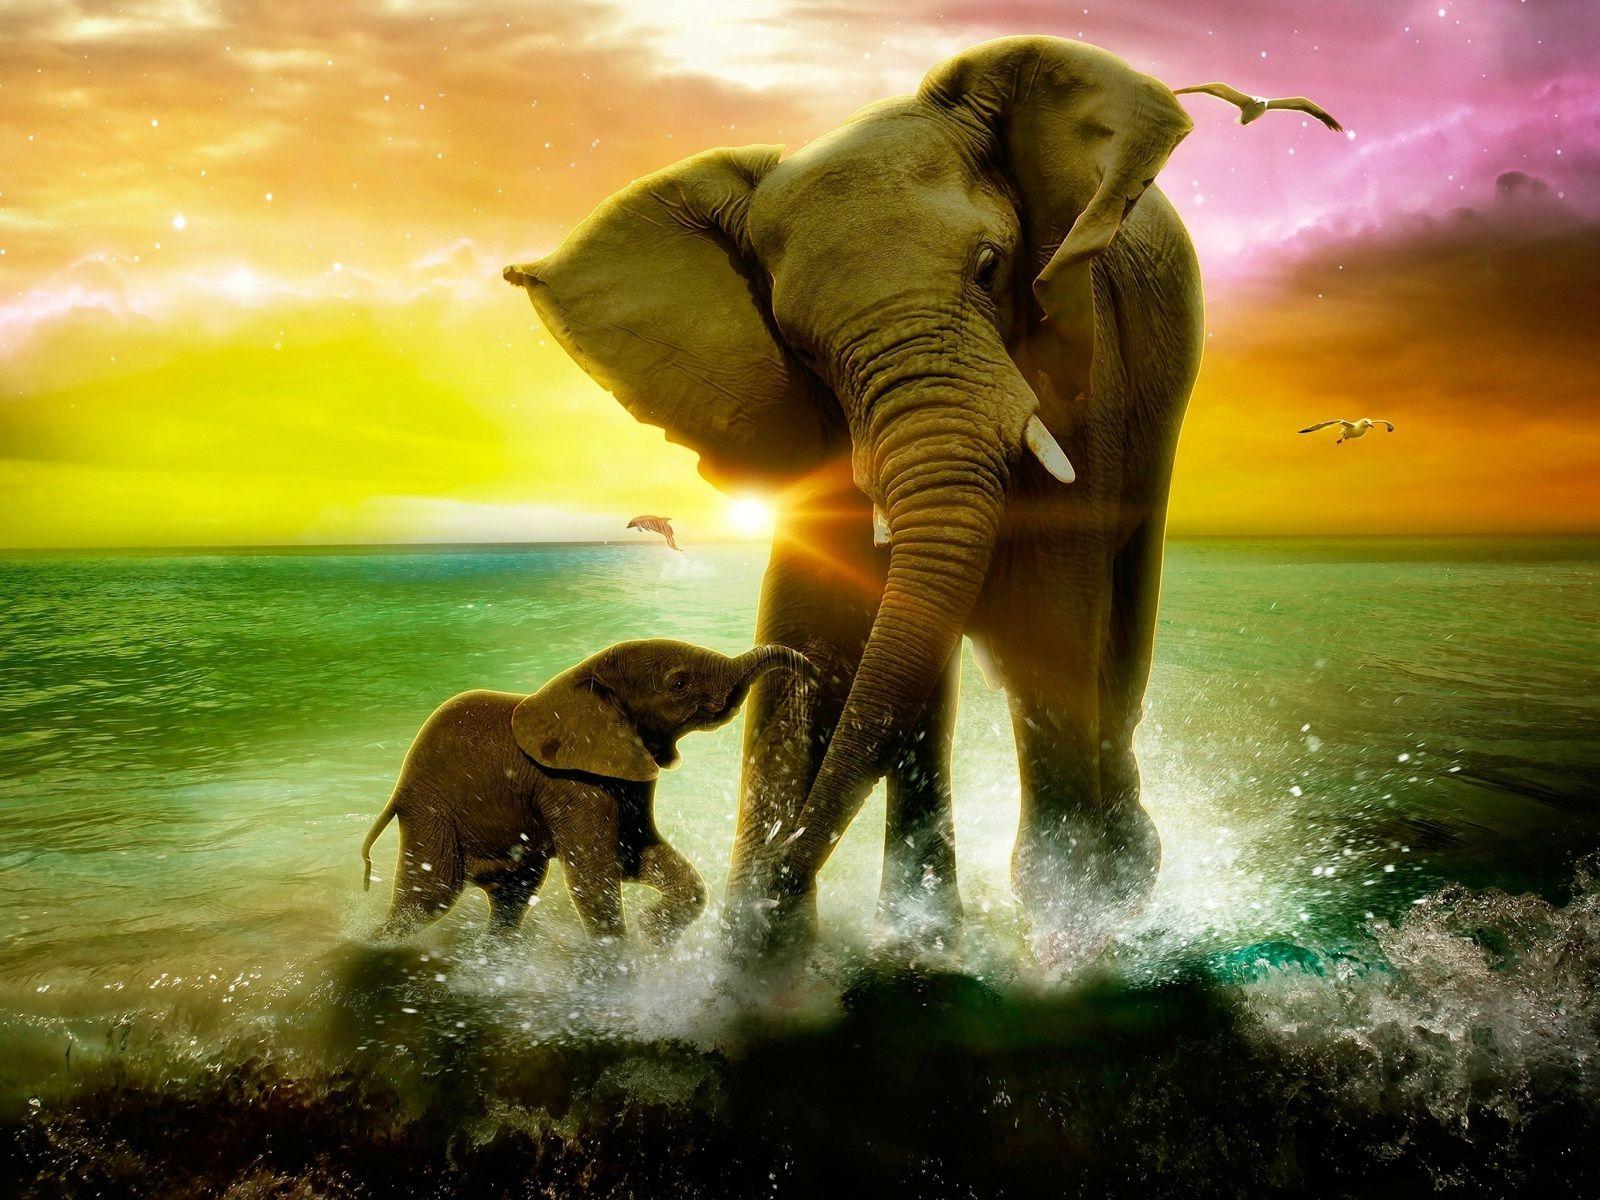 Elephants Image Background HD Wallpaper Free Download